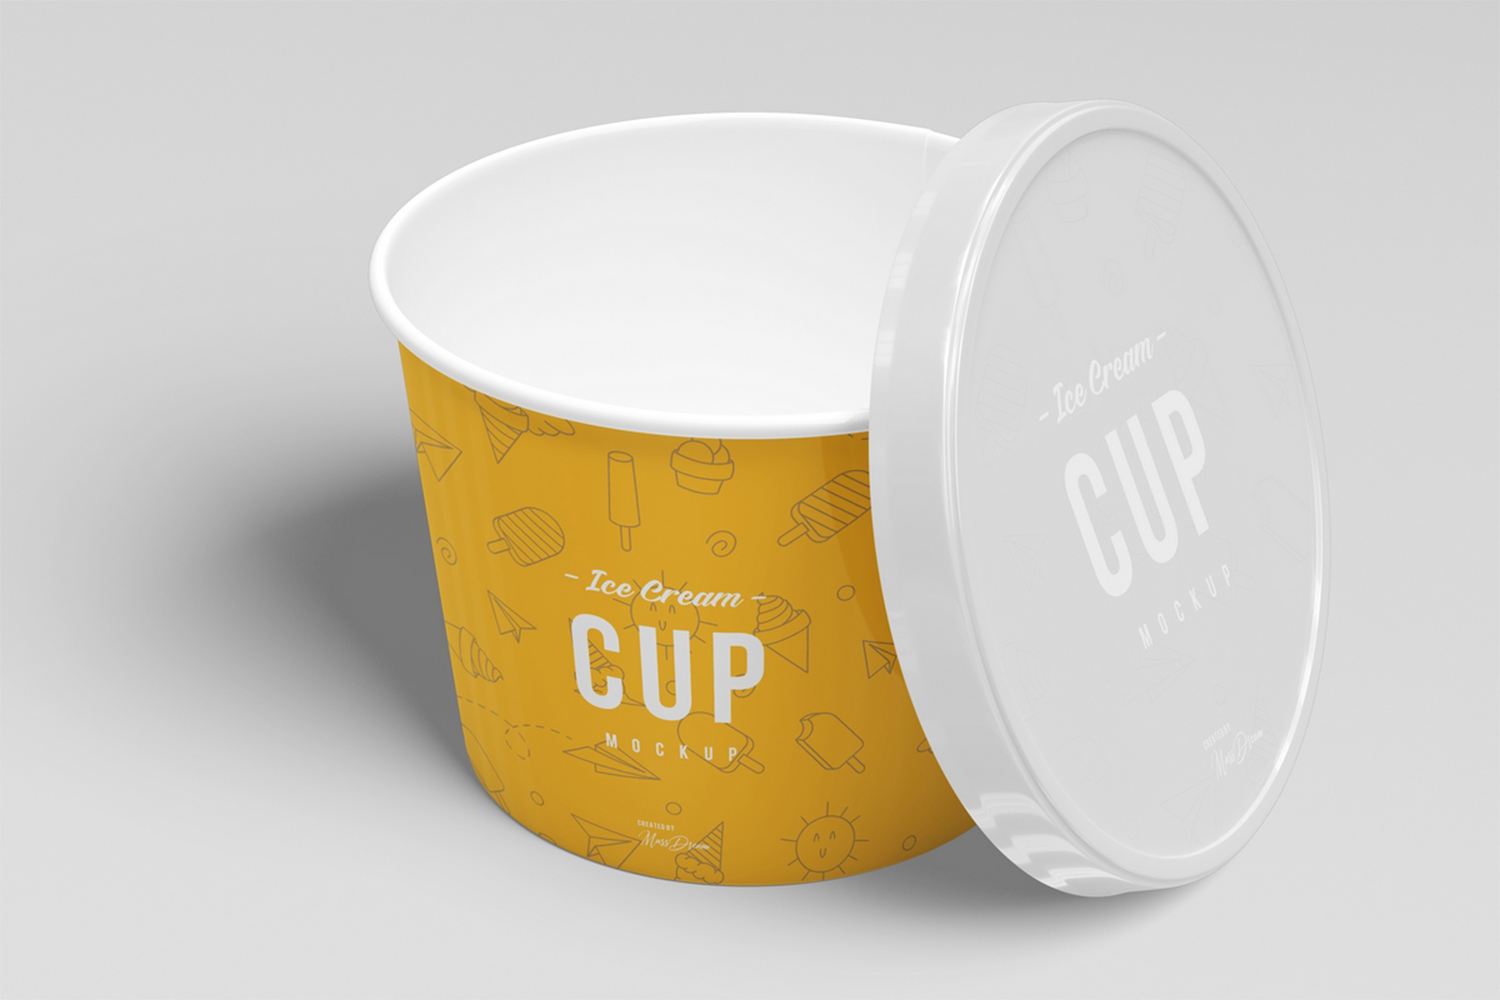 3oz Ice Cream Cup Mockup Free Download